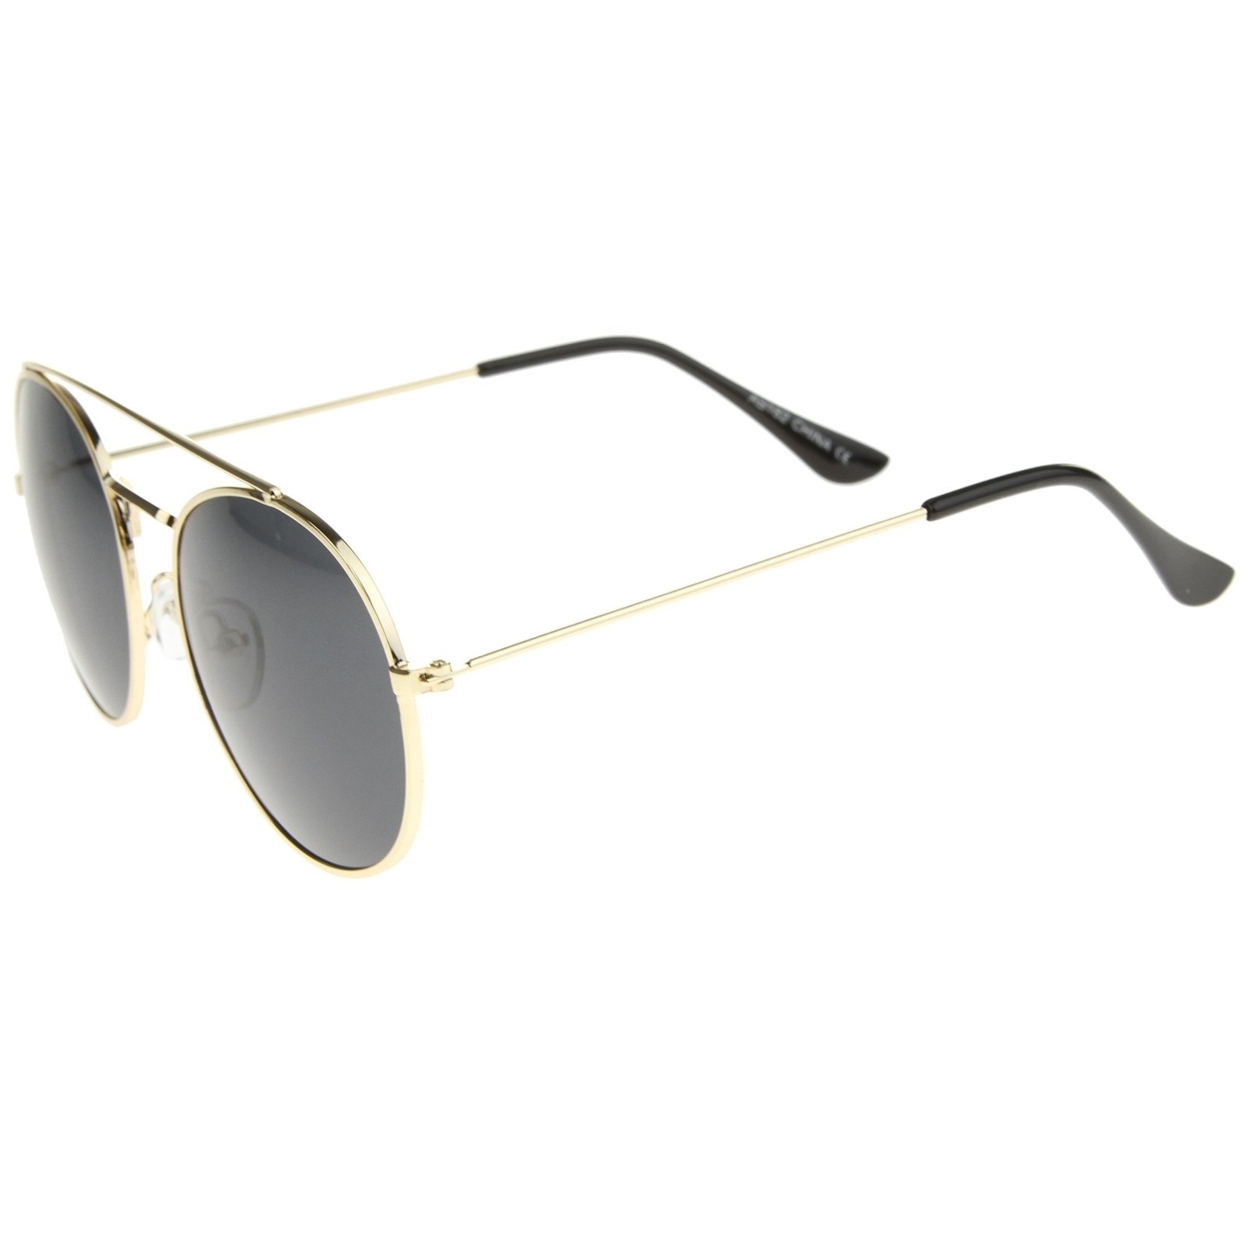 Retro Fashion Minimal Thin Metal Brow Bar Round Sunglasses 52mm - Gold / Smoke